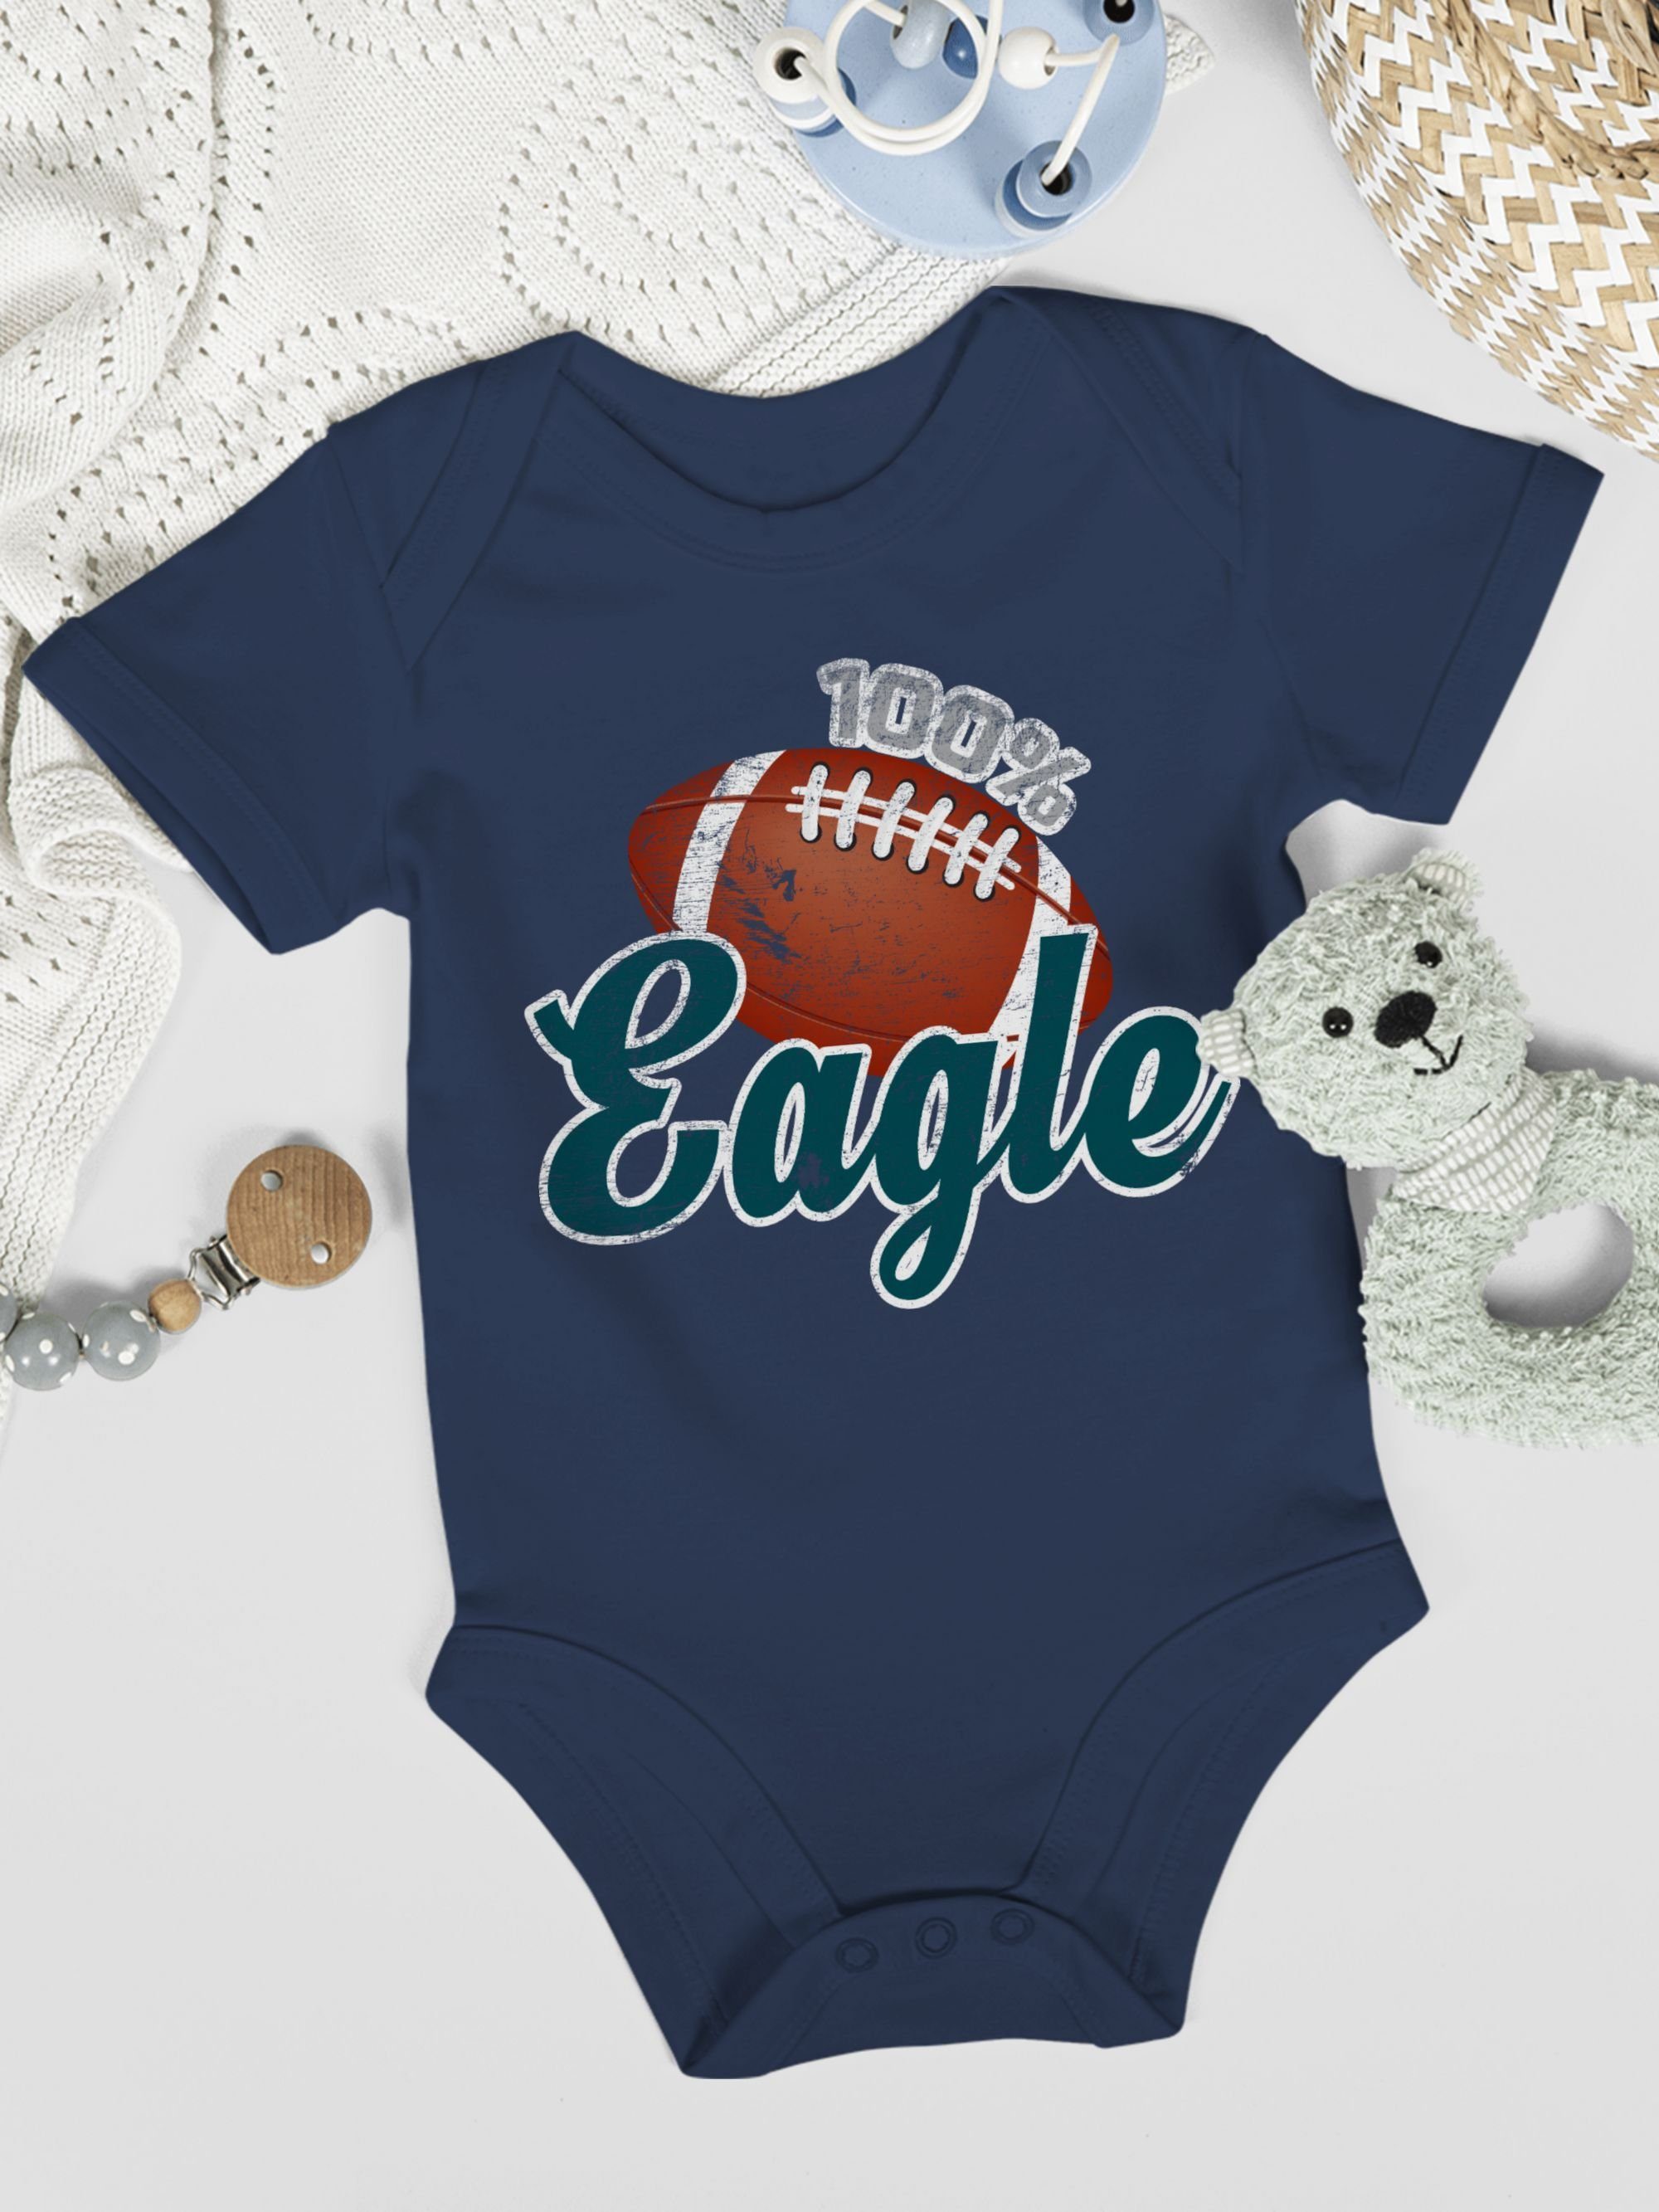 Navy & Baby Shirtbody Bewegung Shirtracer 2 100% Eagle Blau Sport